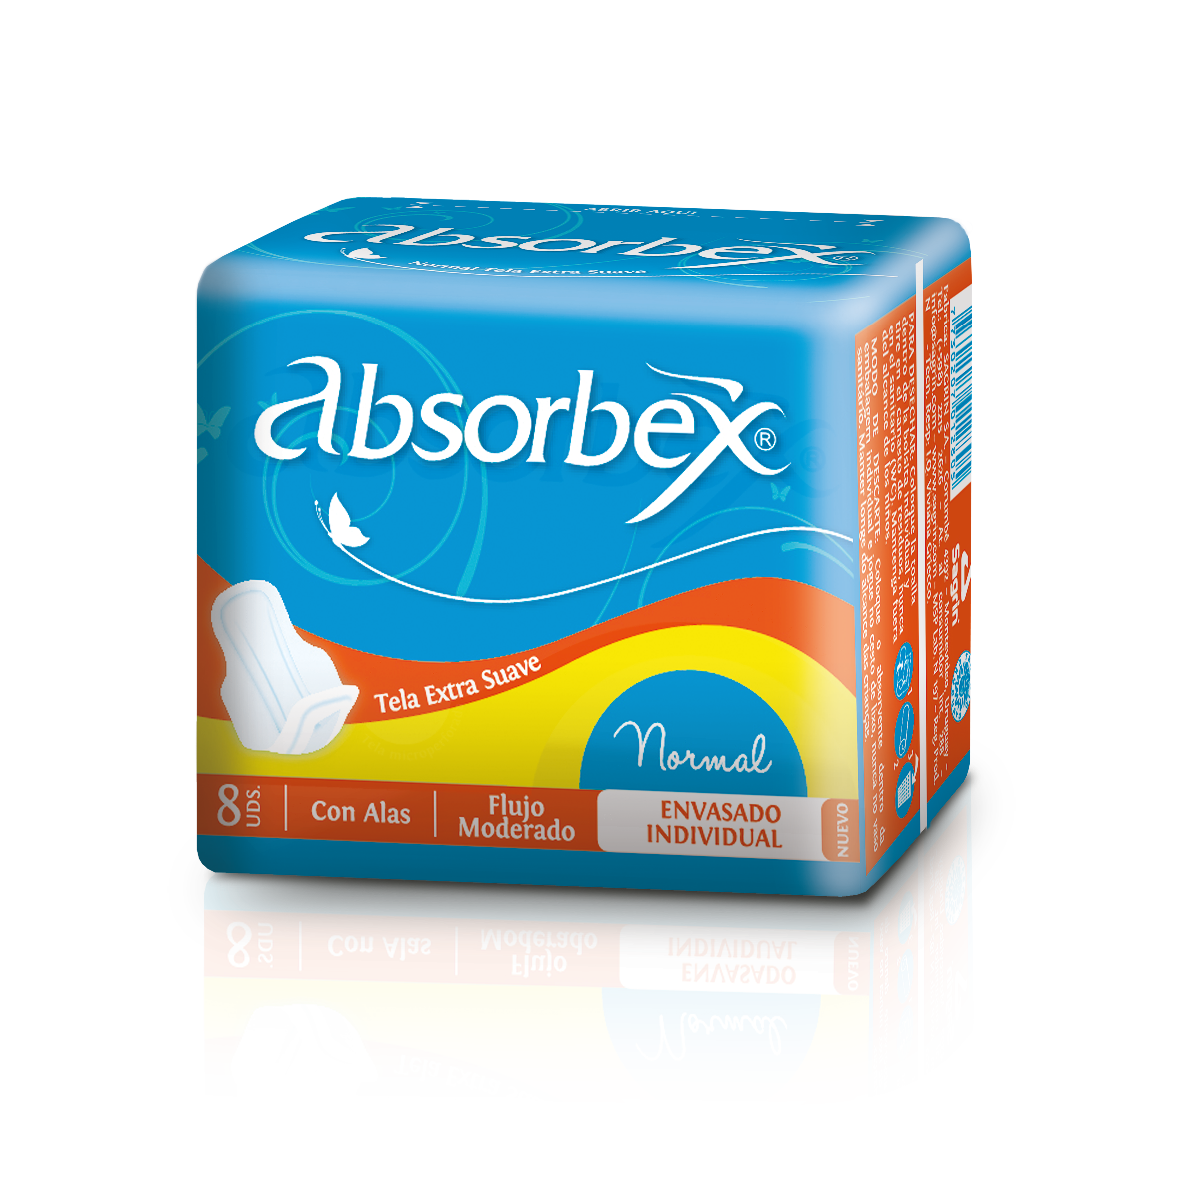 Absorbex toalla femenina tela extra suave trif. x 8 unidades